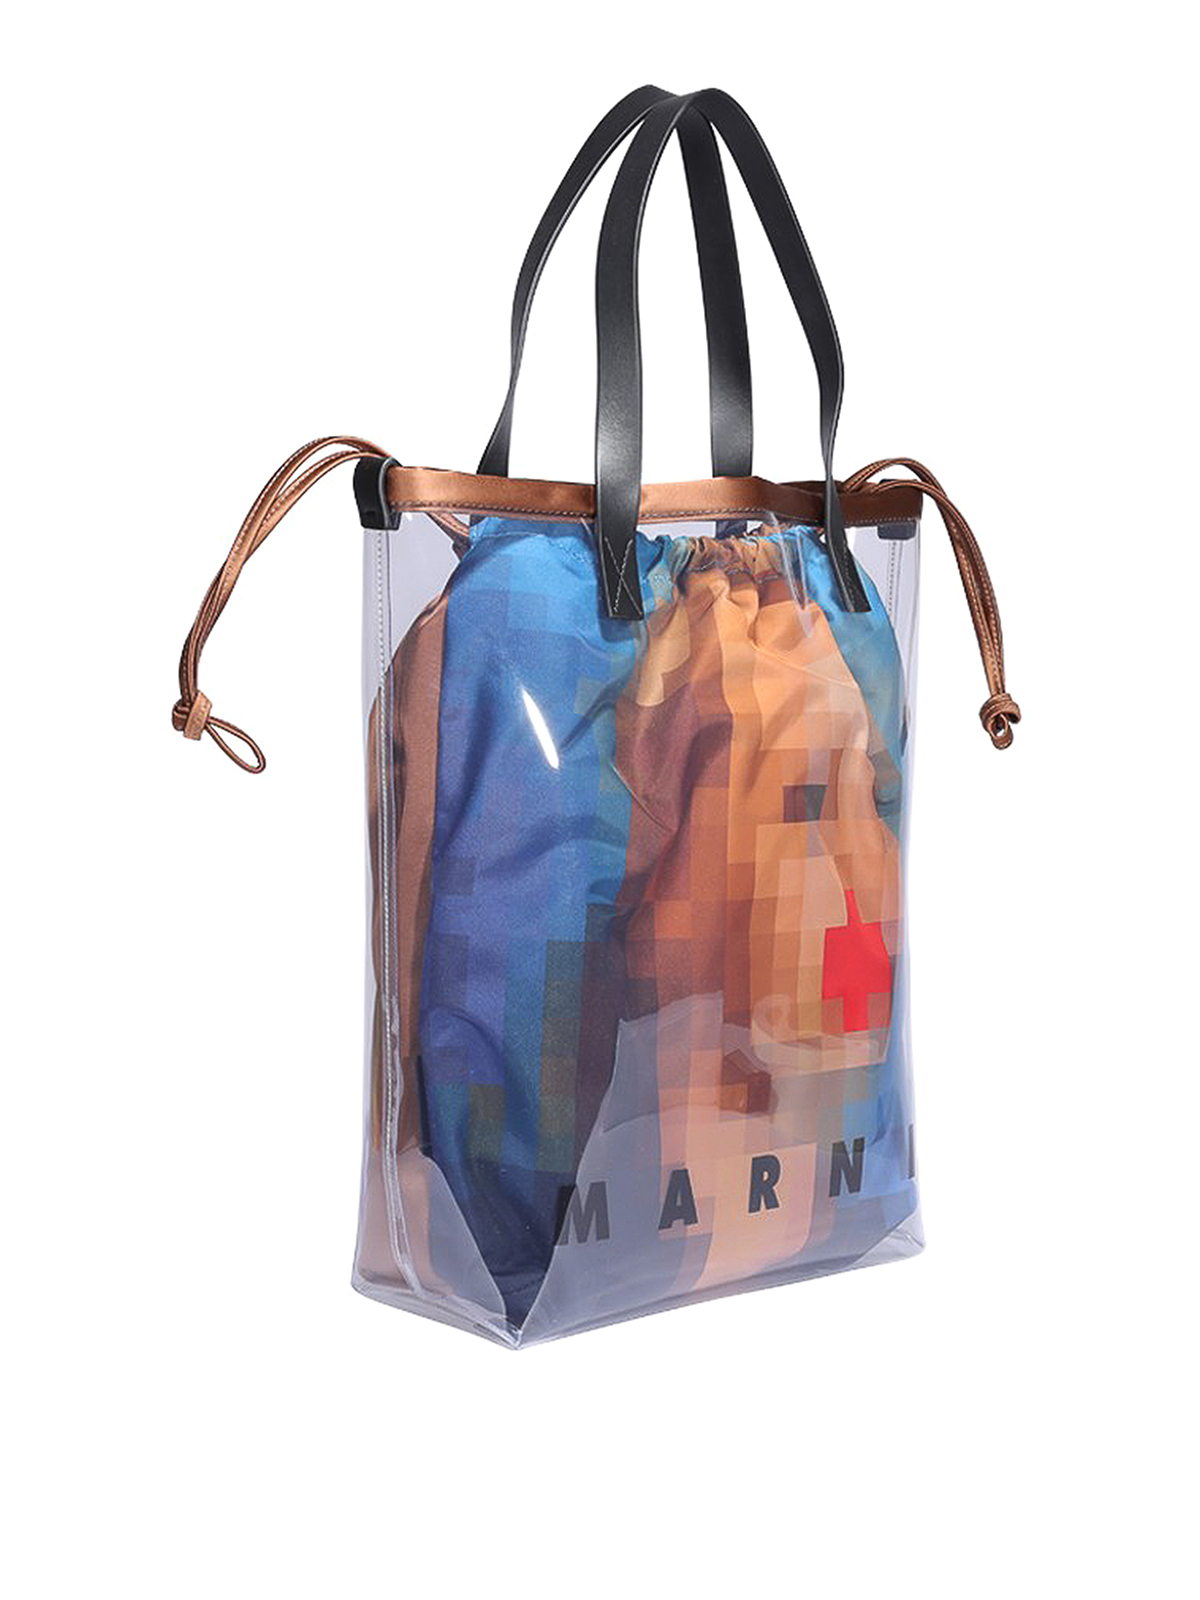 Totes Brand Bags Pvc, Woman Pvc Tote Bag, Pvc Crossbody Bags